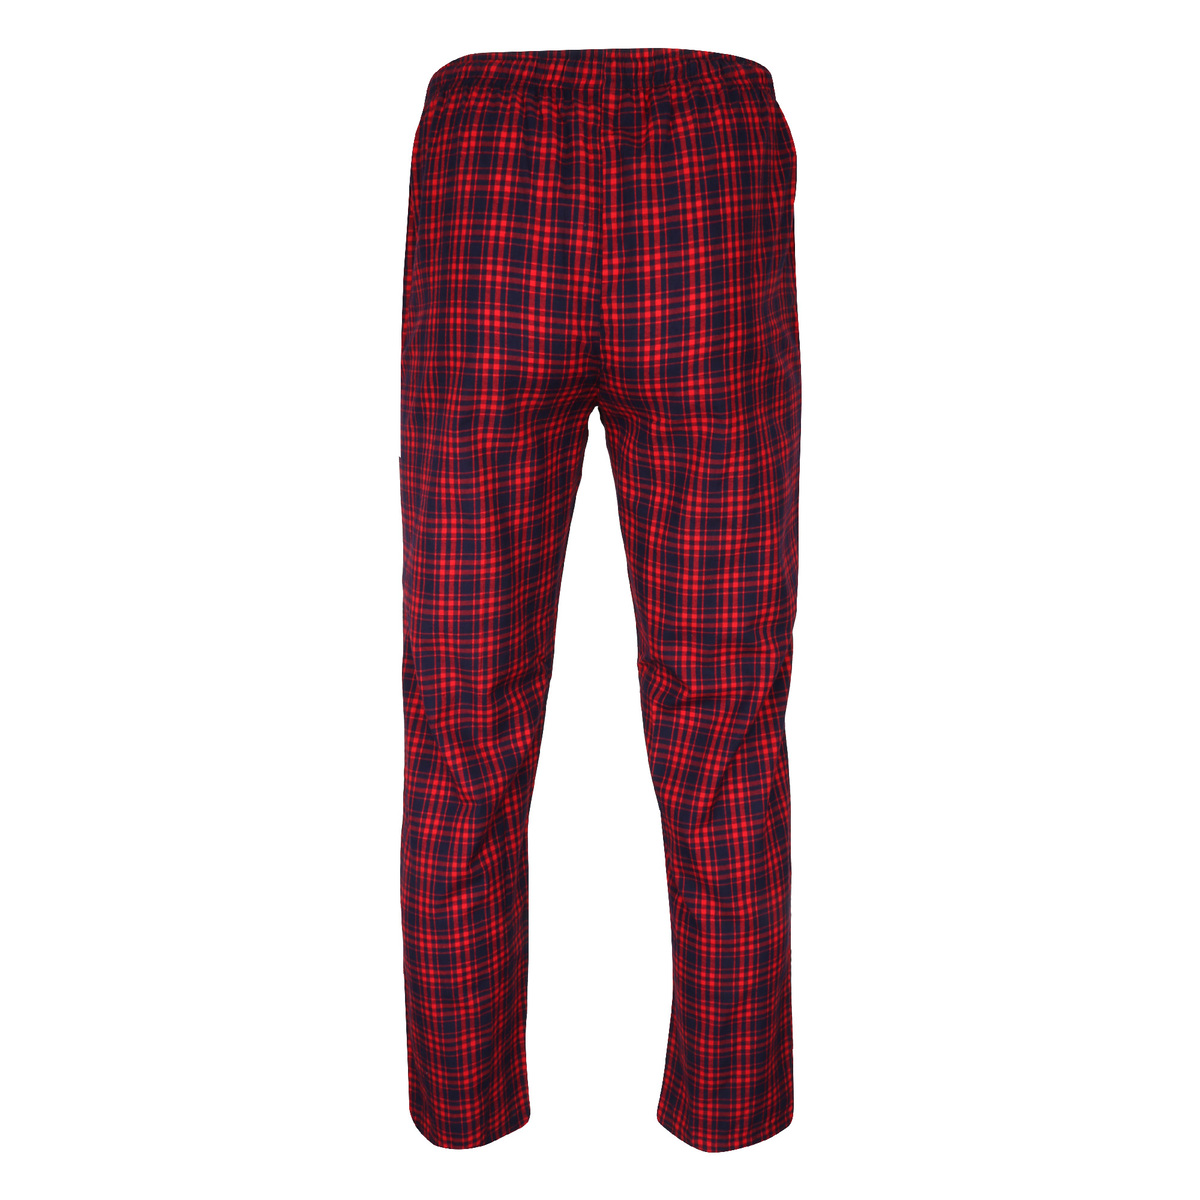 Elite Comfort Men's Woven Night Pants EM06 Red, Medium